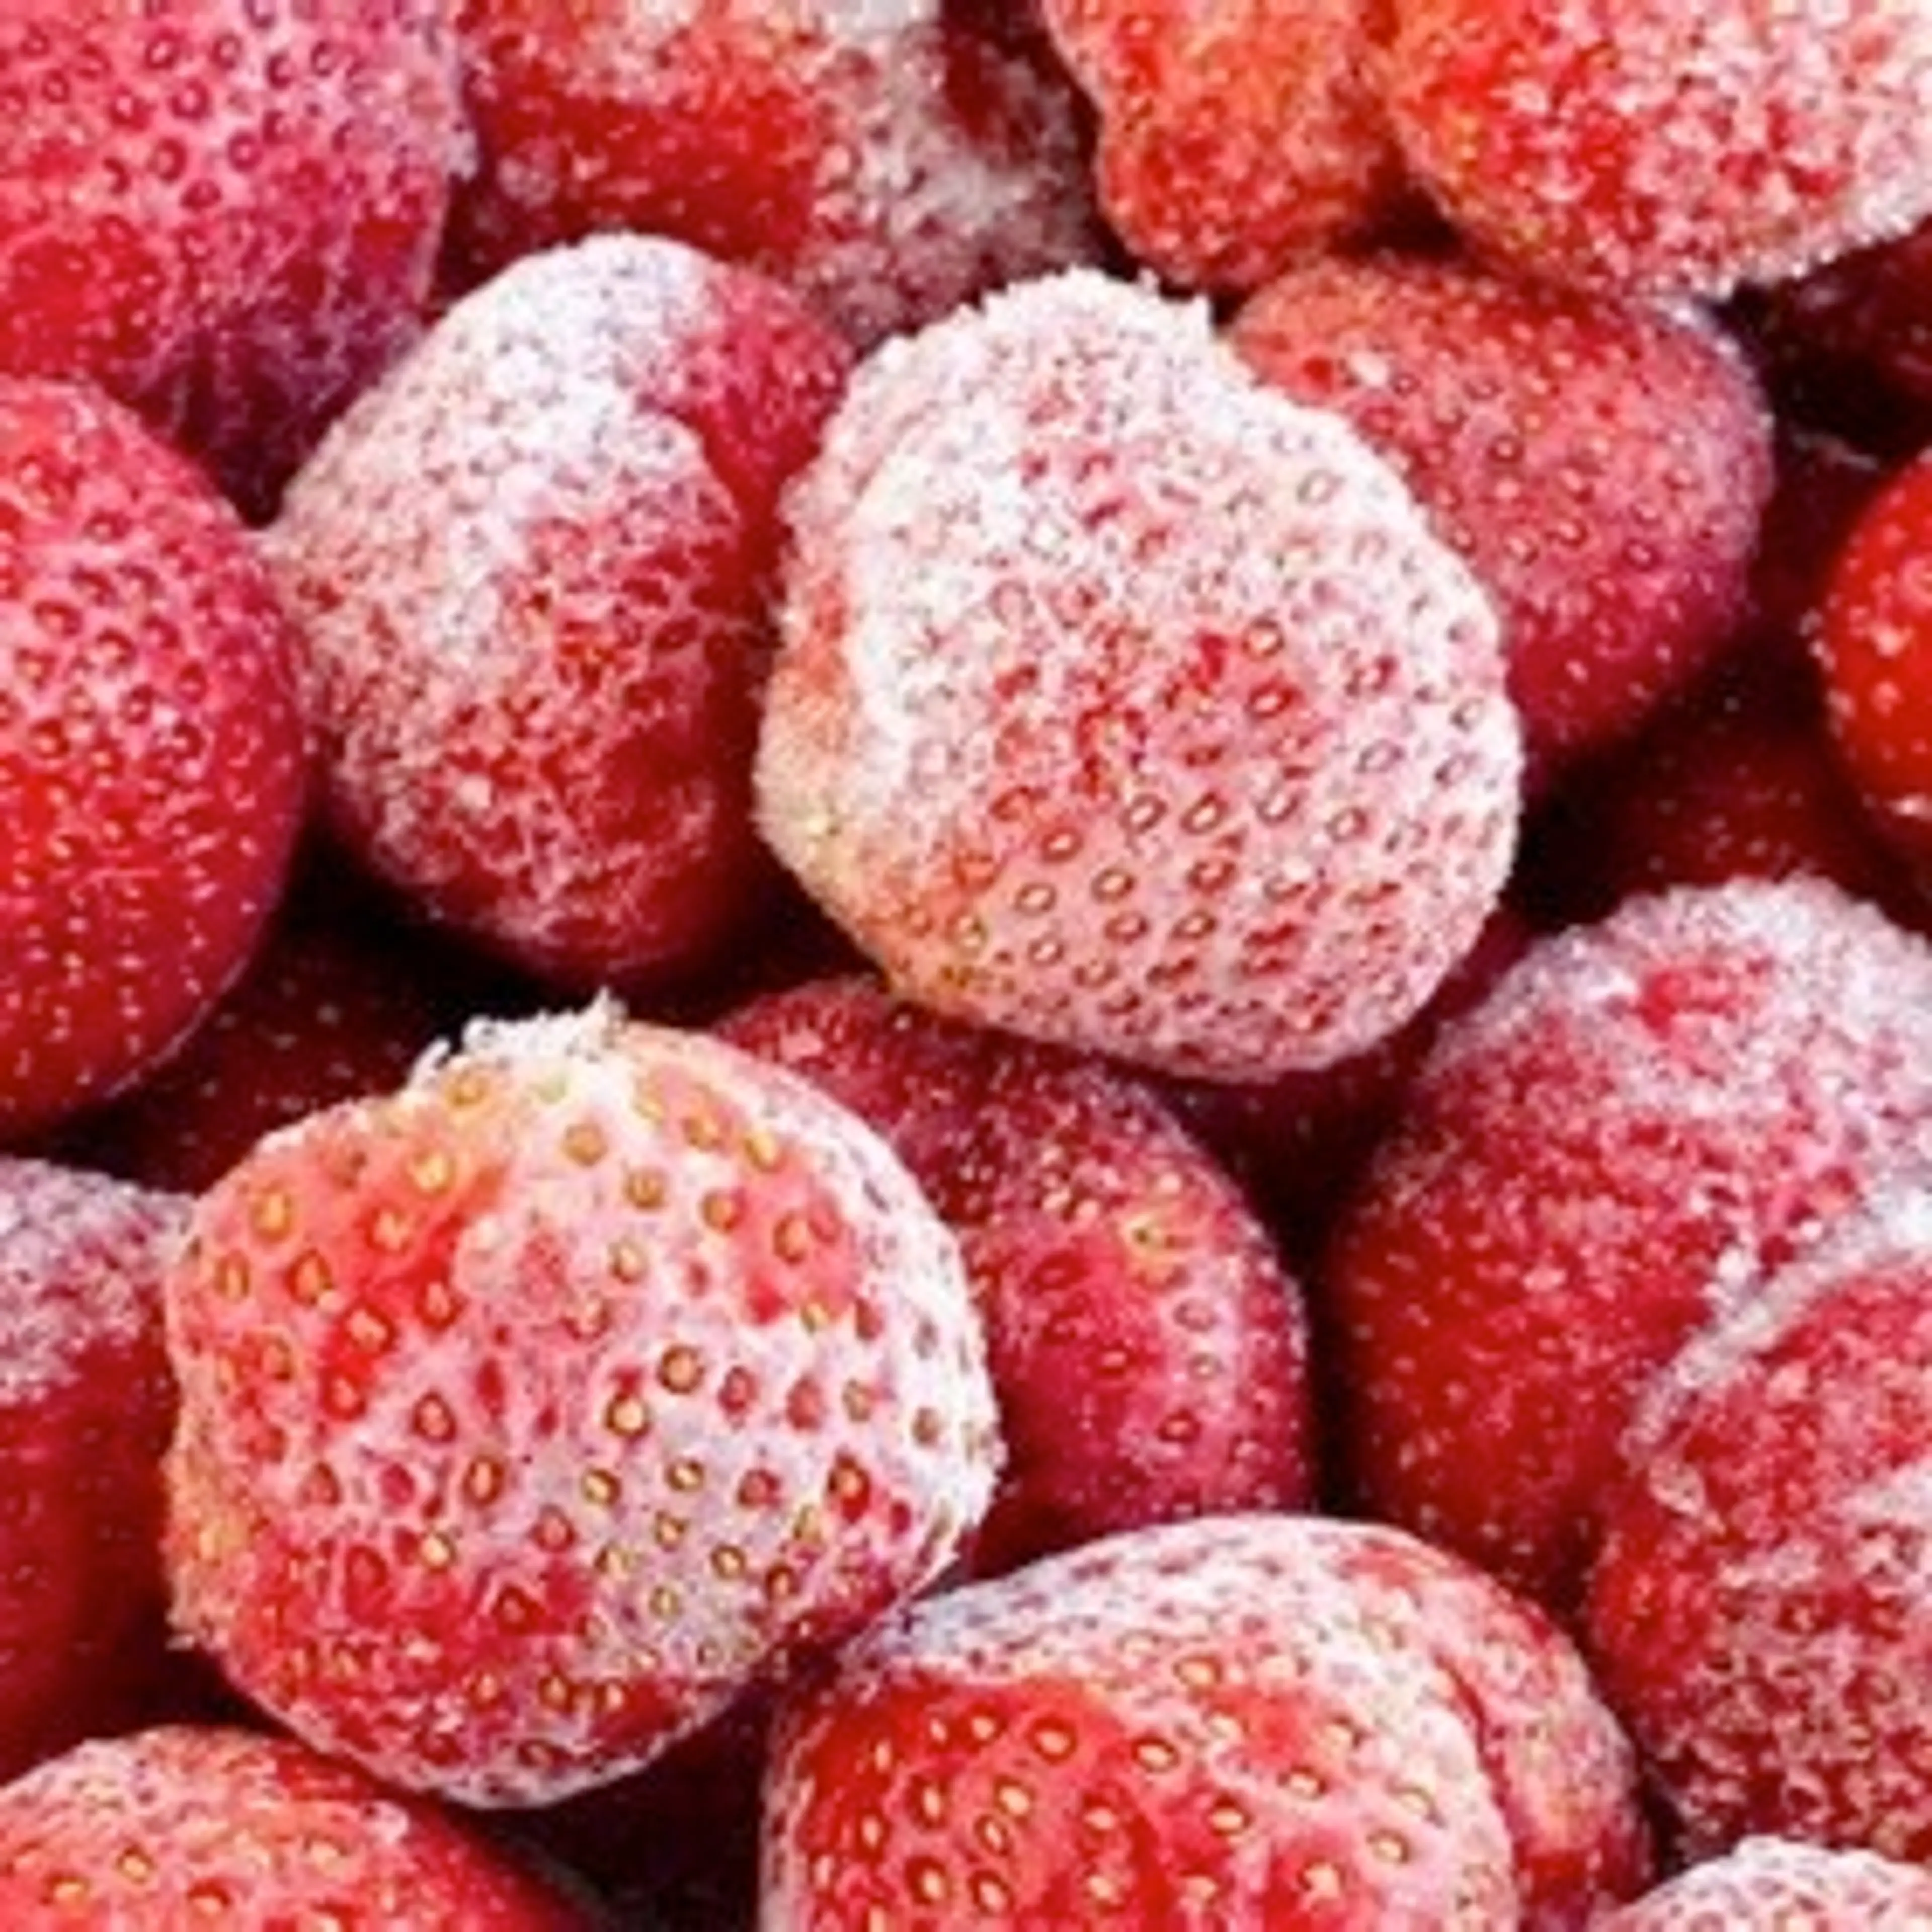 Freezer Strawberries